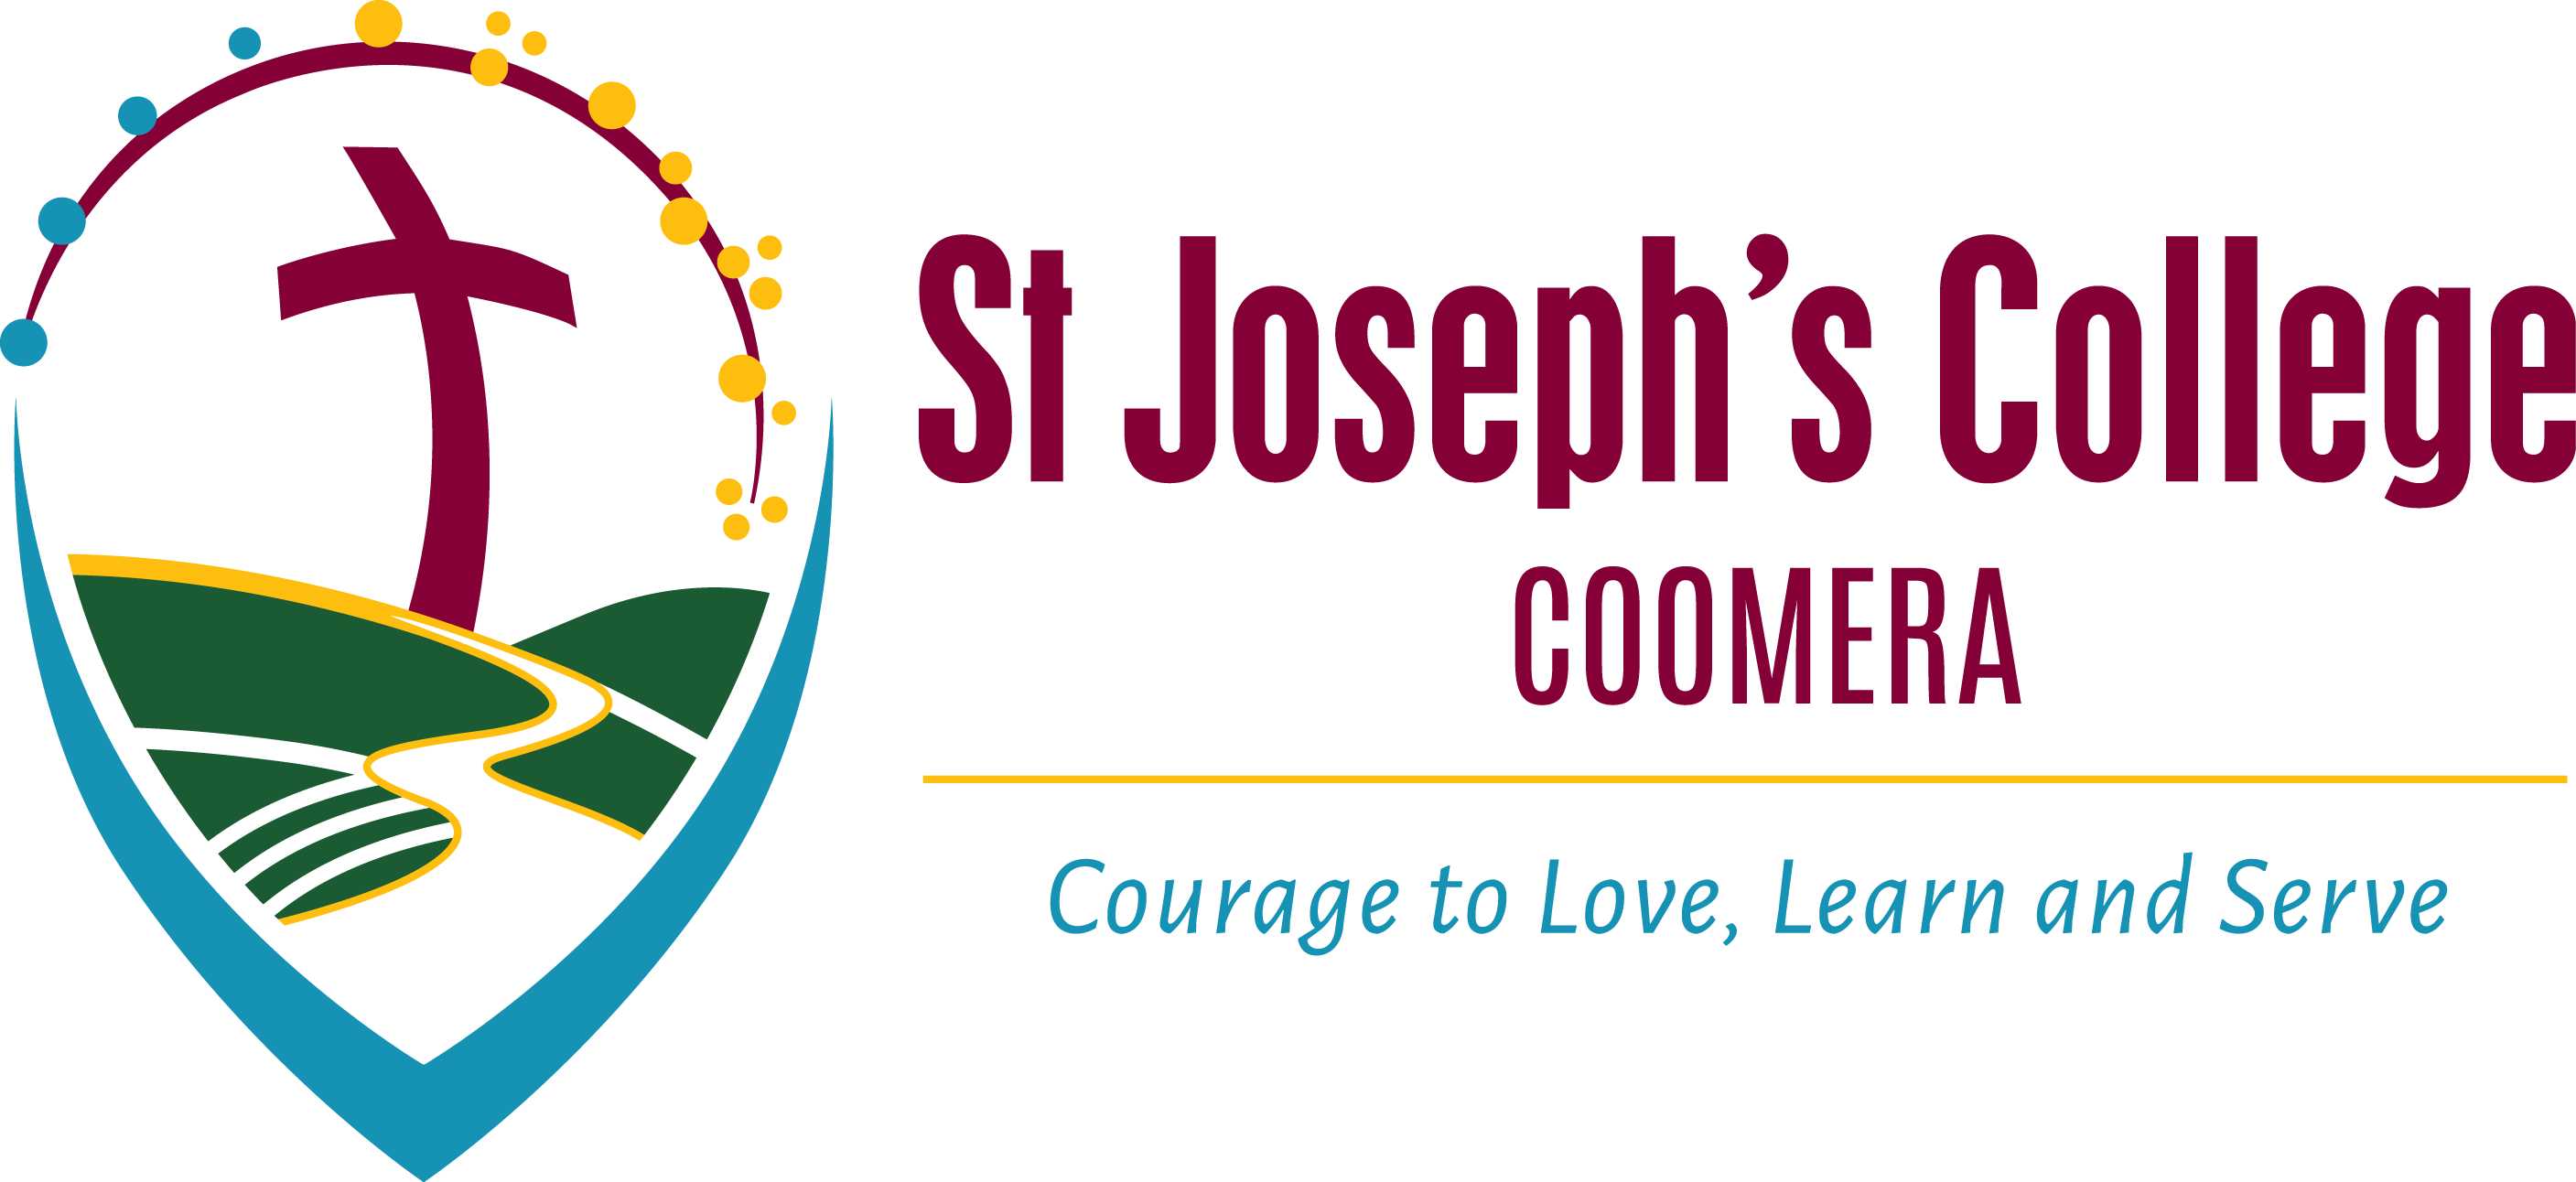 St Joseph's College Logo.png